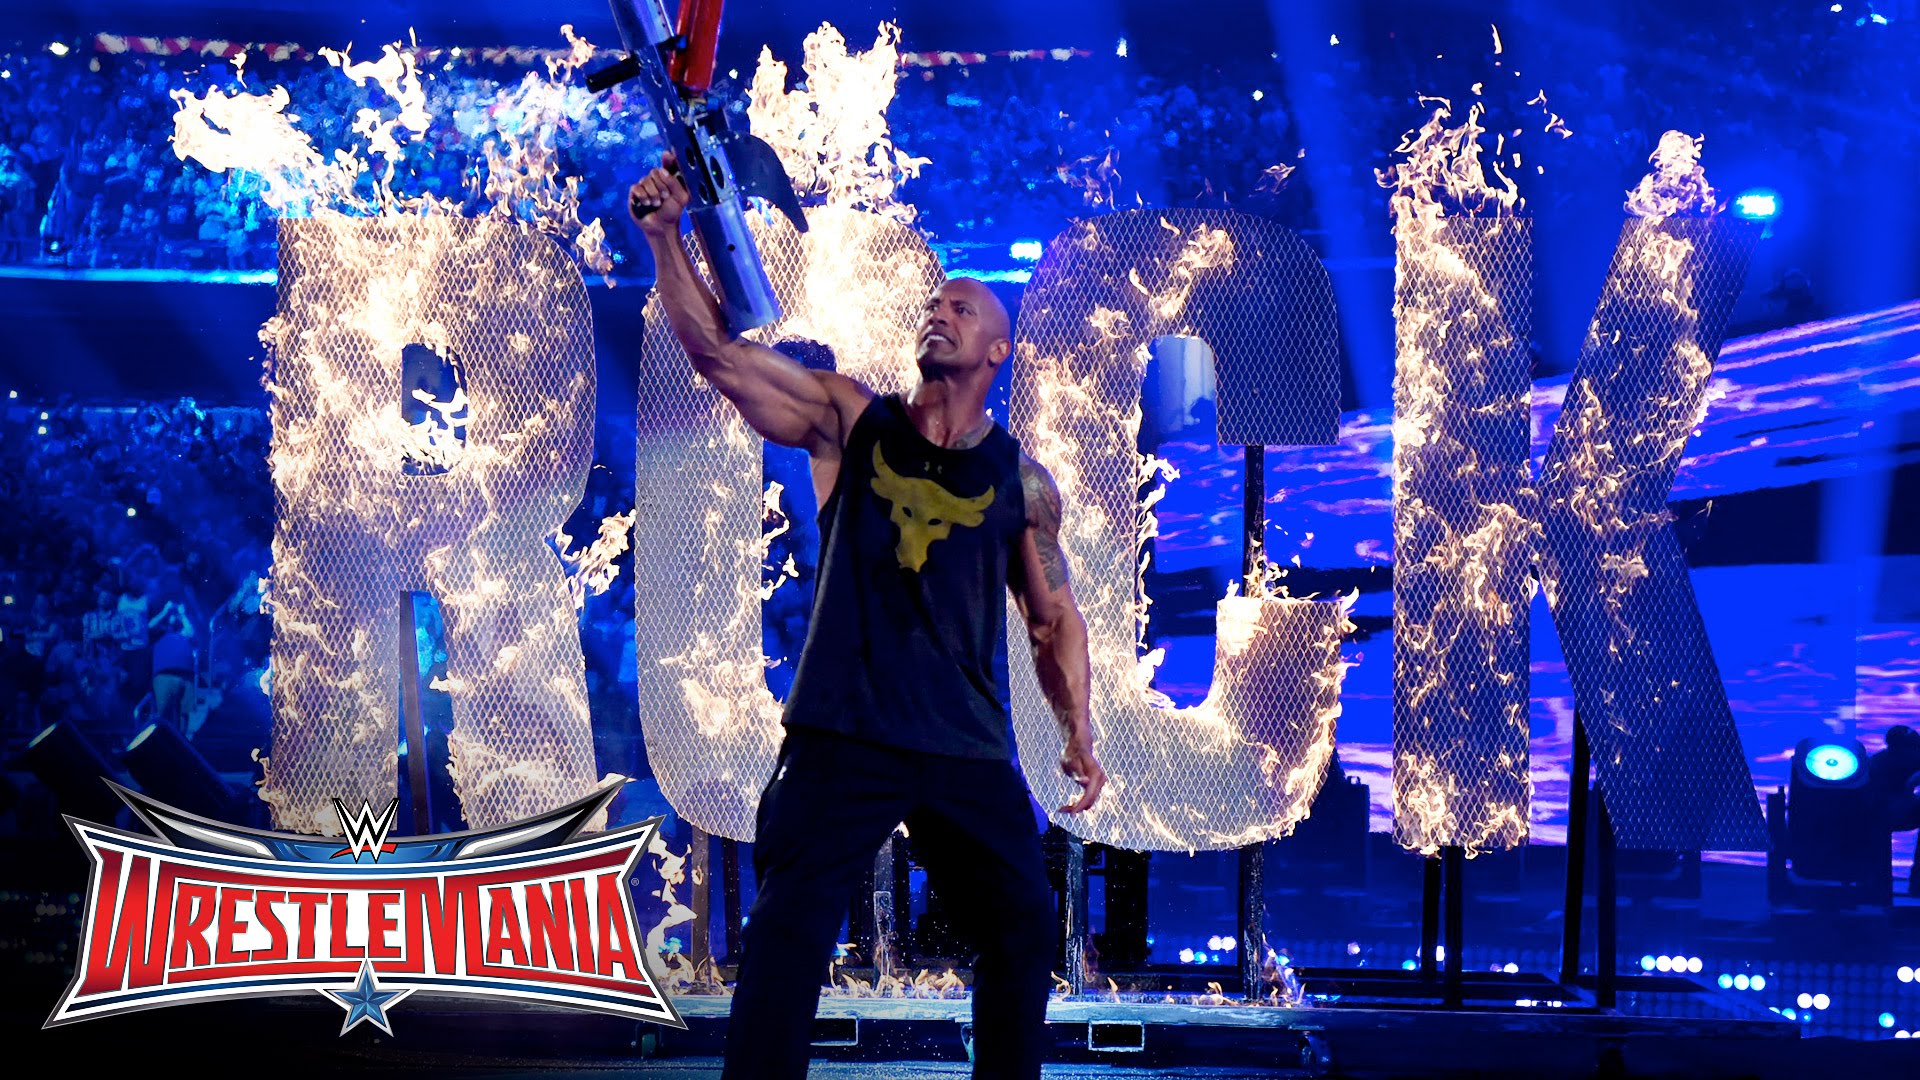 The Rock makes his return at Wrestle Mania 32 in Dallas